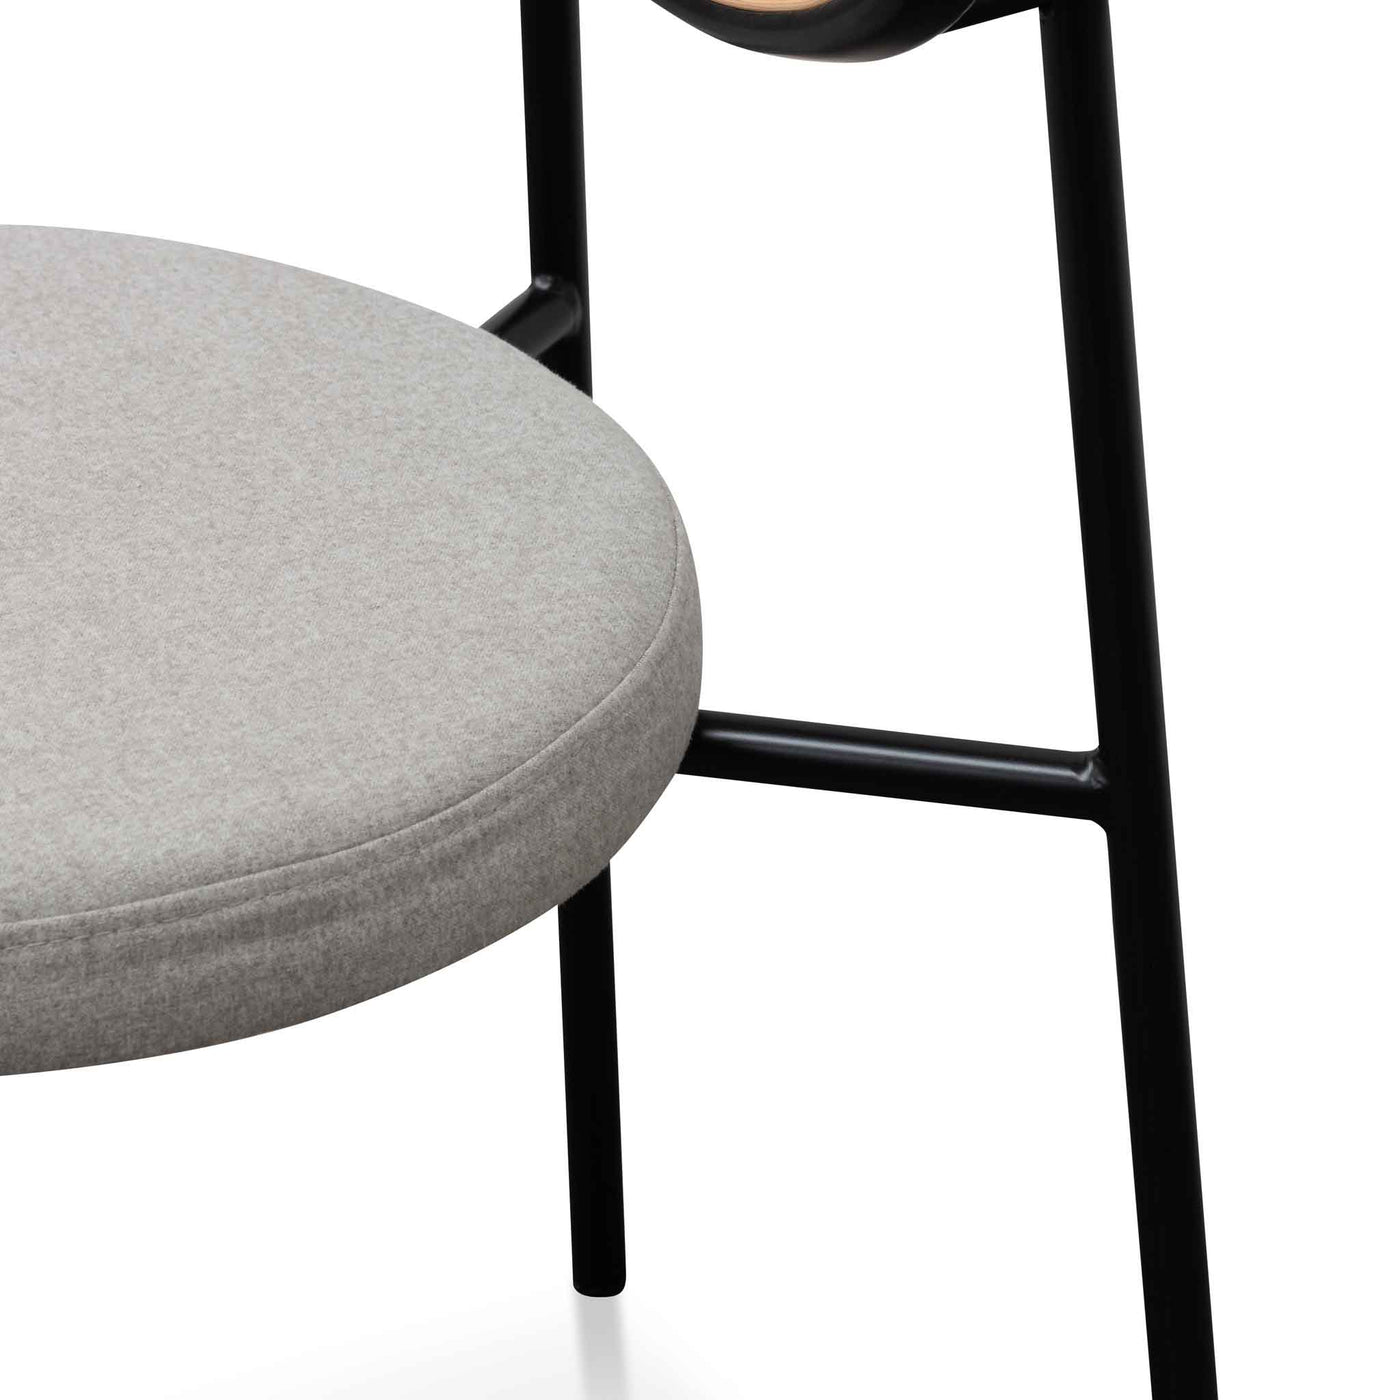 Grey Fabric Natural Rattan Dining Chair - Black